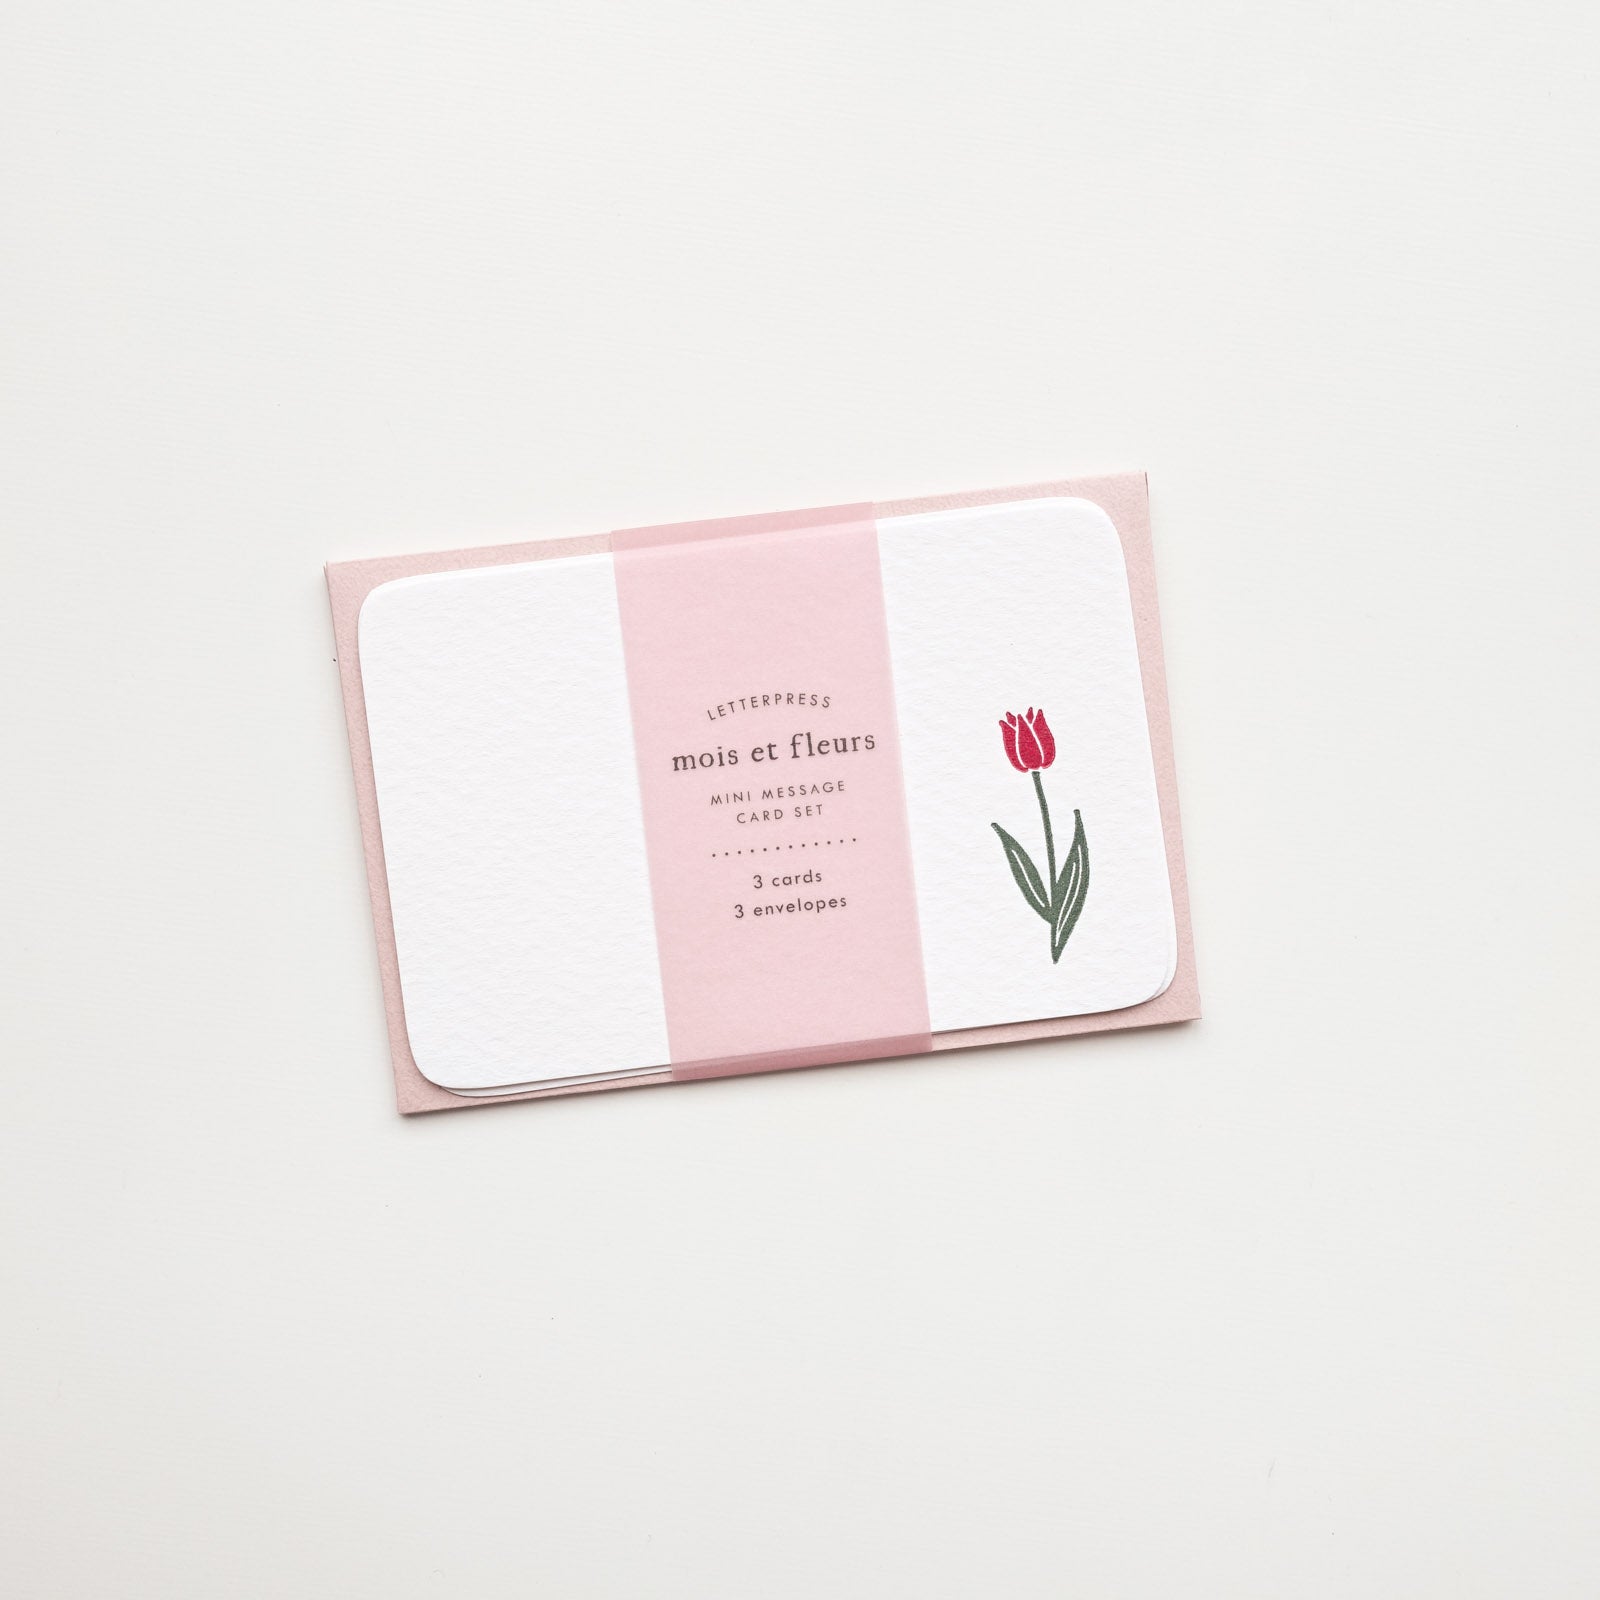 Tulip Flower Letterpress Mini Message Card Set